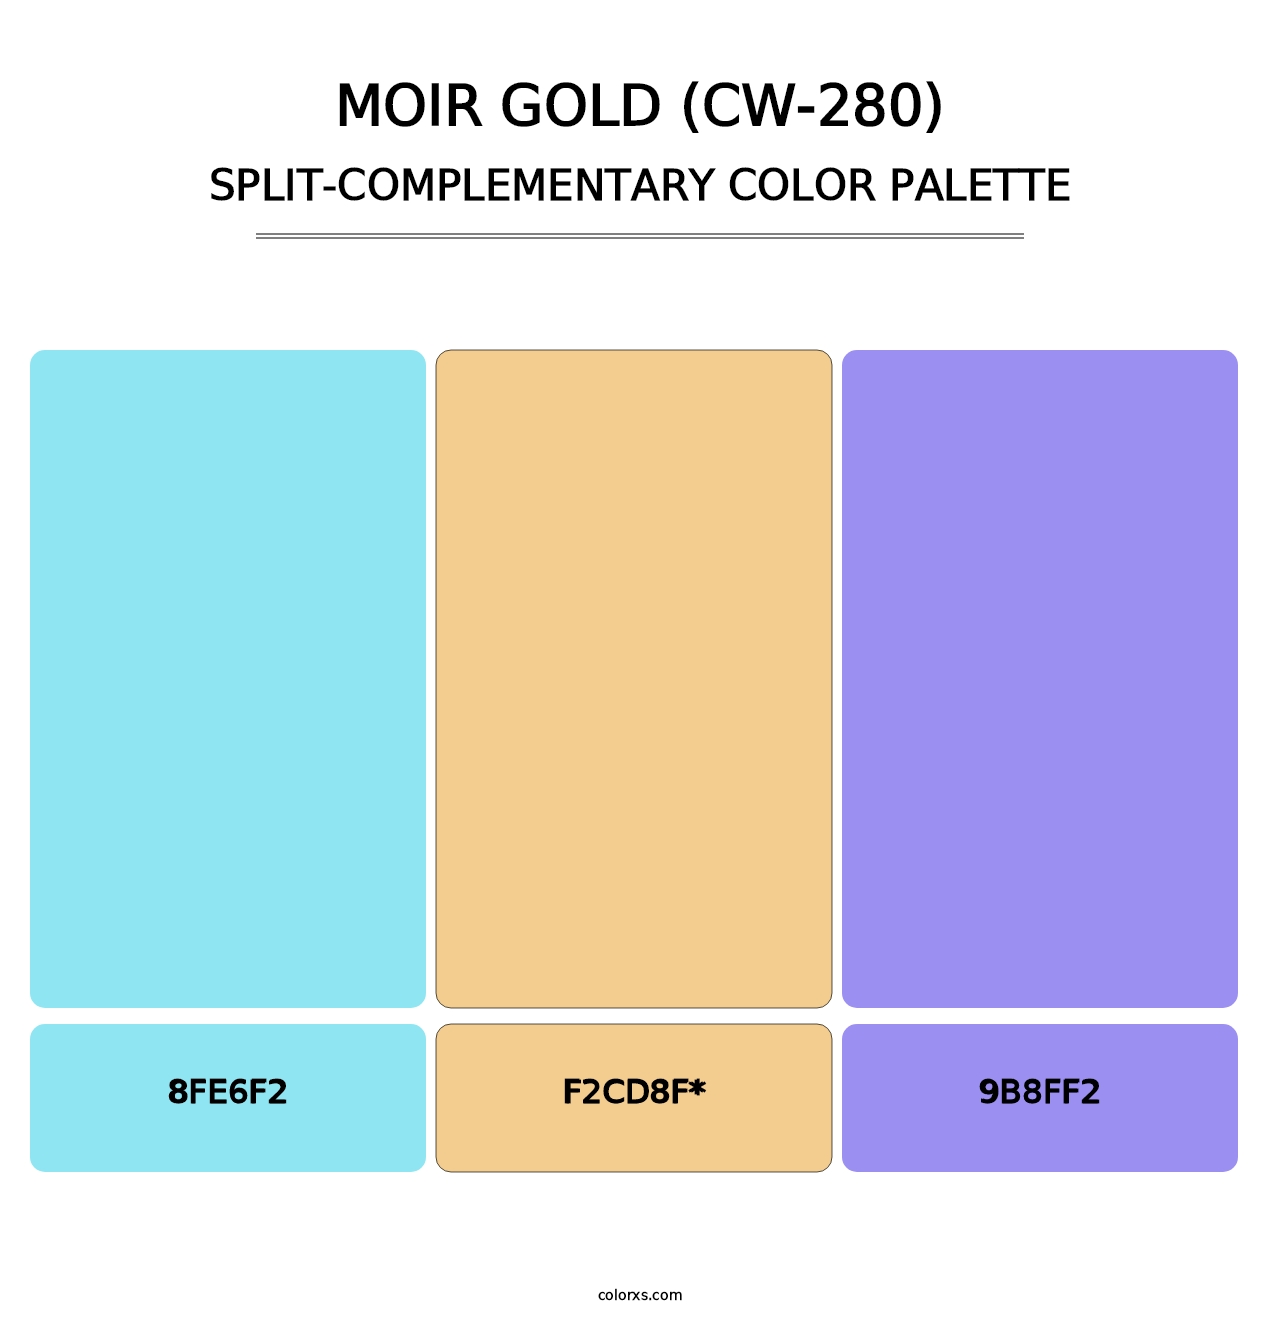 Moir Gold (CW-280) - Split-Complementary Color Palette